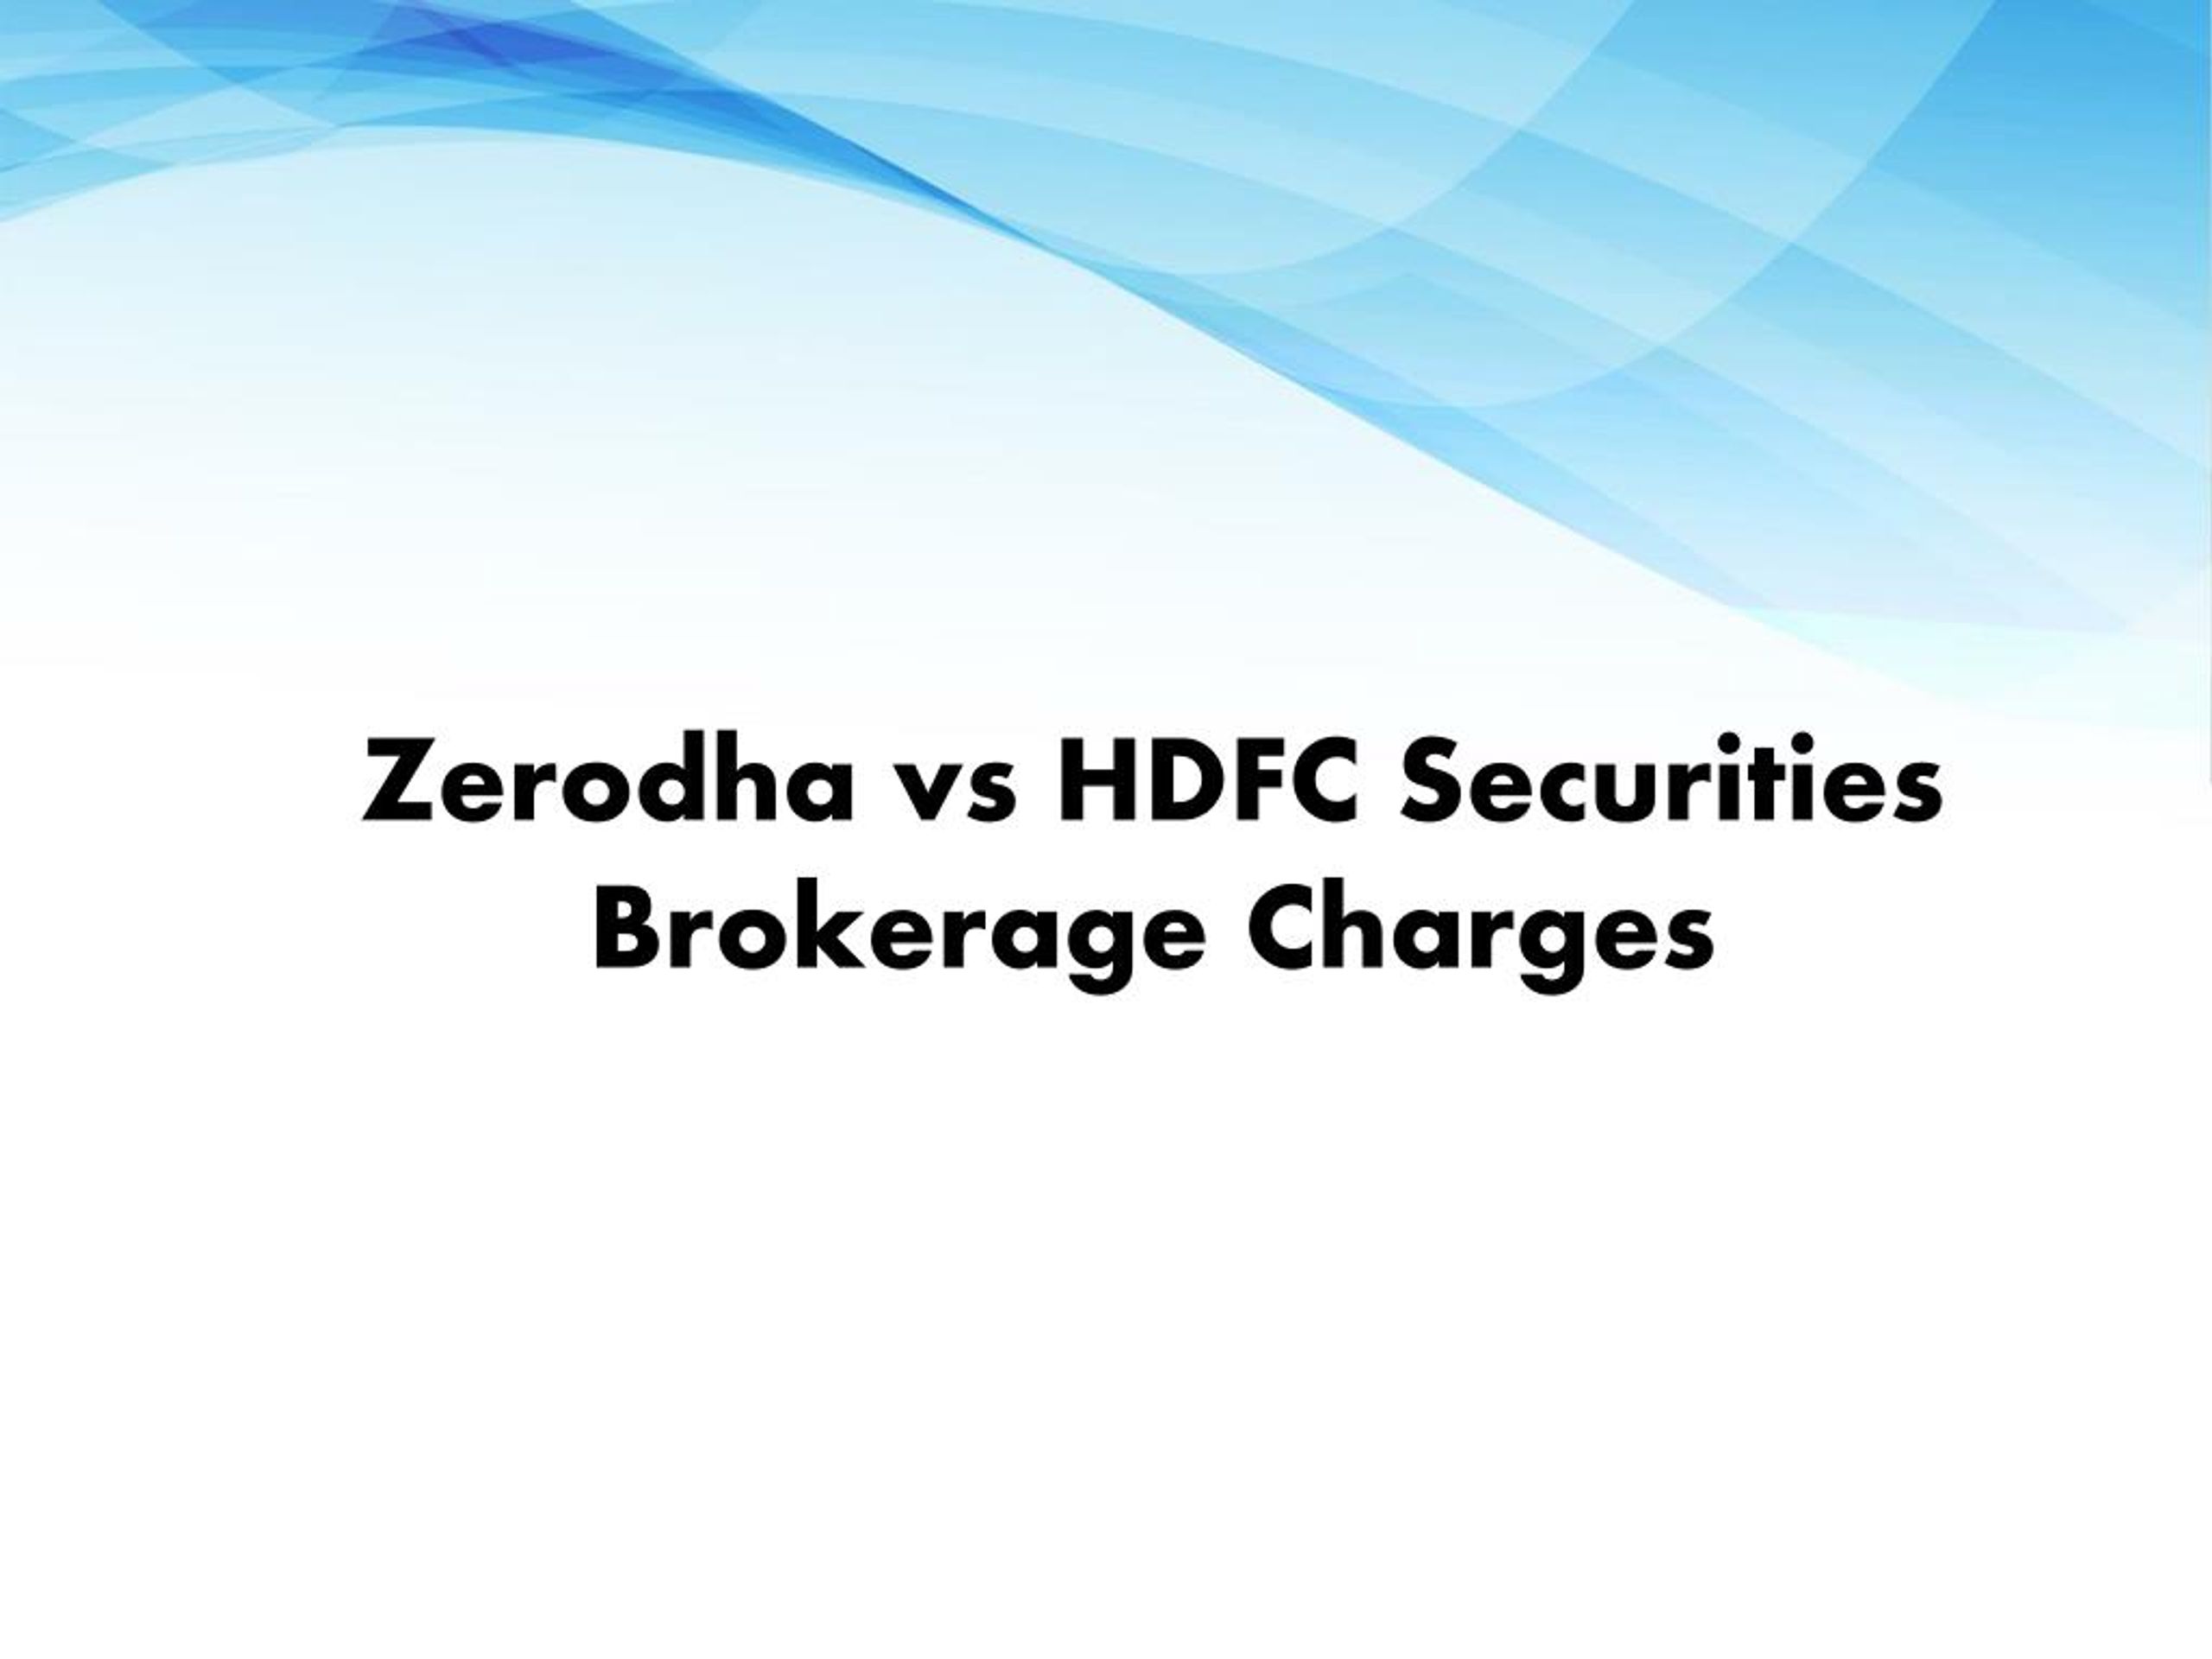 Ppt Compare Zerodha Vs Hdfc Securities Zerodha Vs Hdfc Securities Brokerage Charges 9039